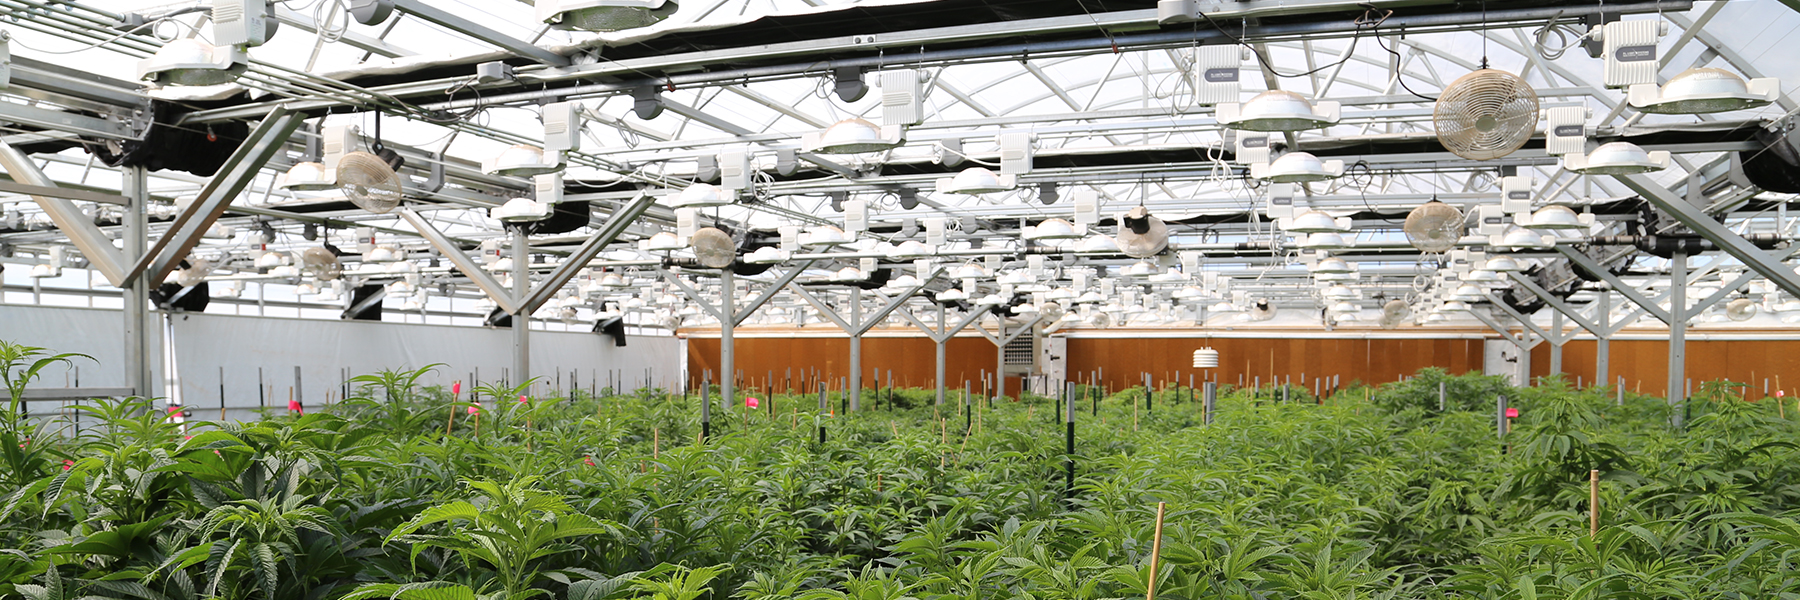 light deprivation marijuana greenhouse